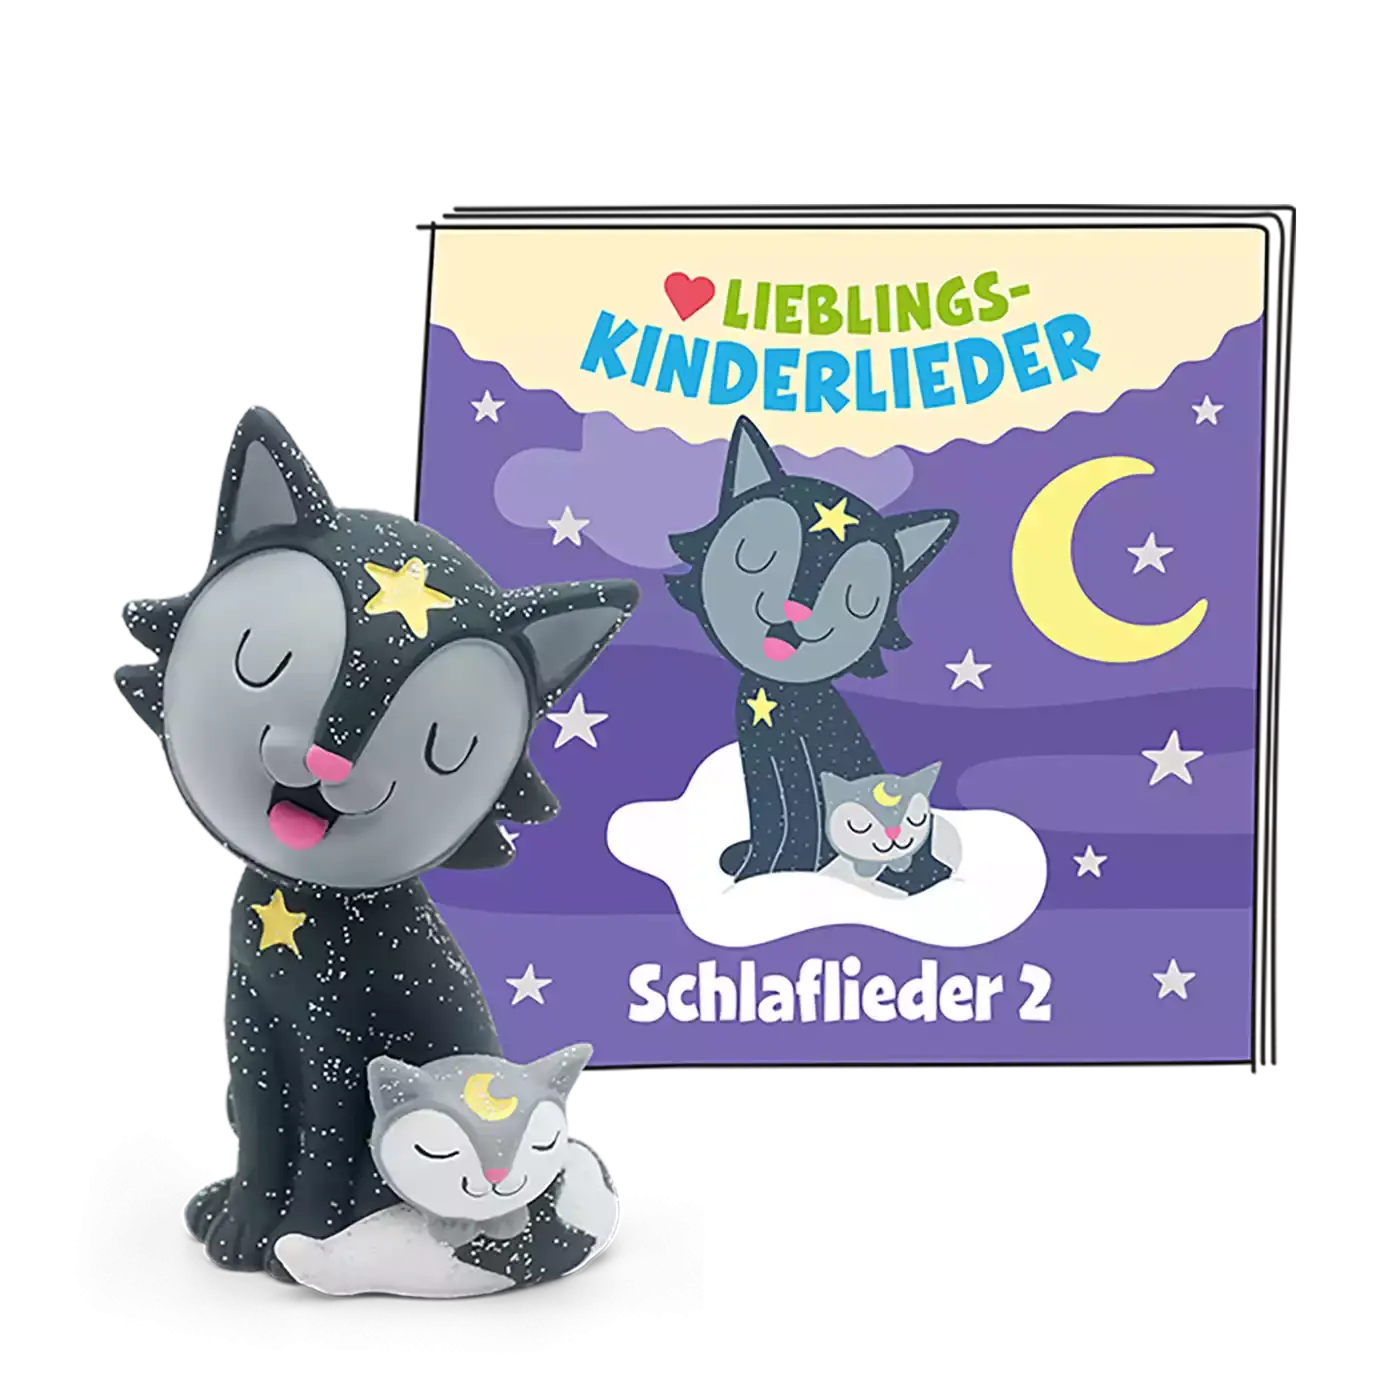 Lieblings-Kinderlieder - Schlaflieder 2 tonies Schwarz 2000581999104 3